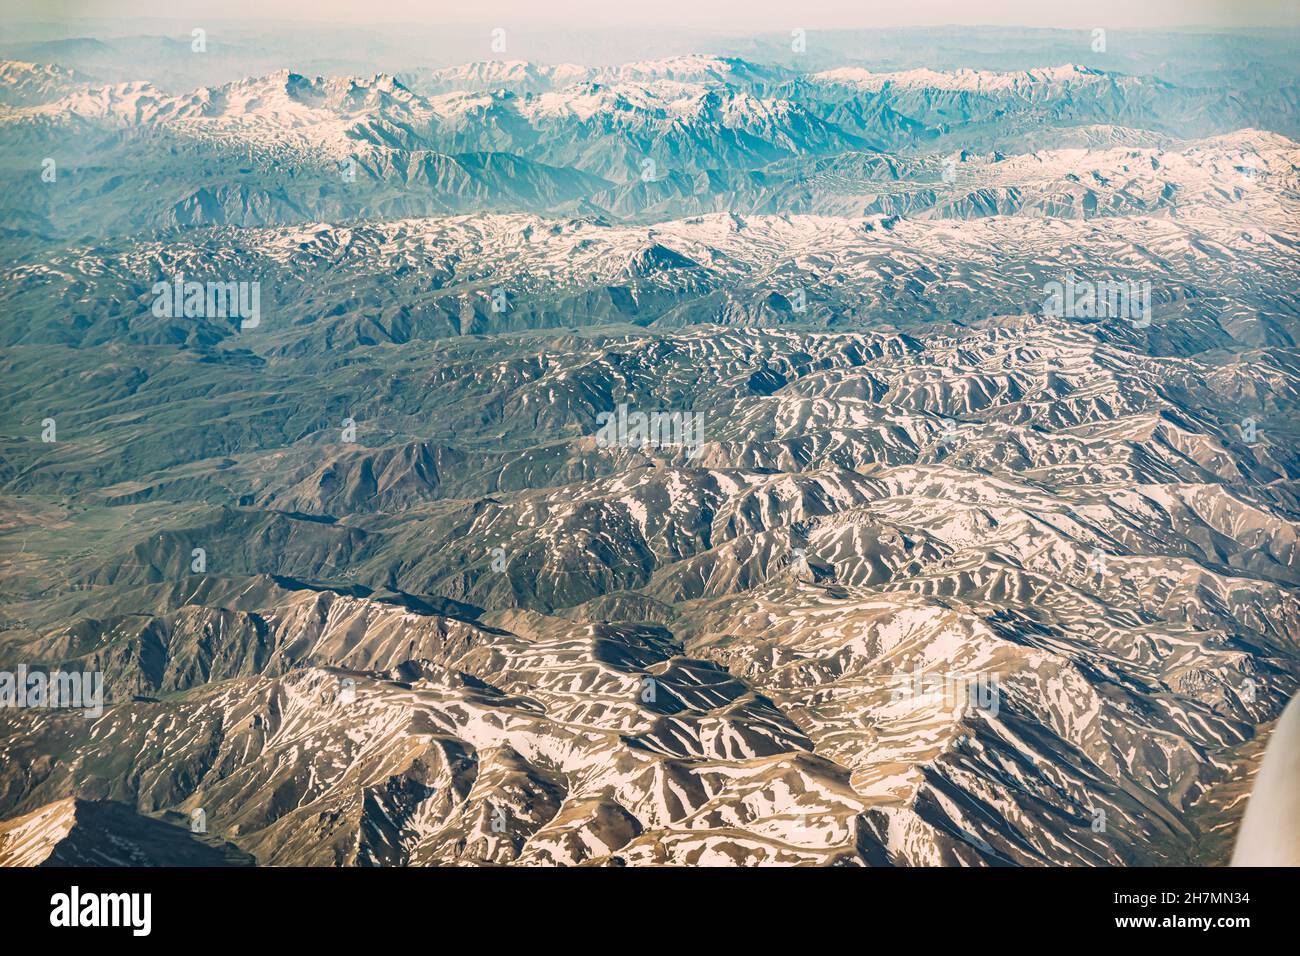 Aerial View Of Mountains Of Urmia Region From Window Of Plane. West Azerbaijan Province, Iran Stock Photo